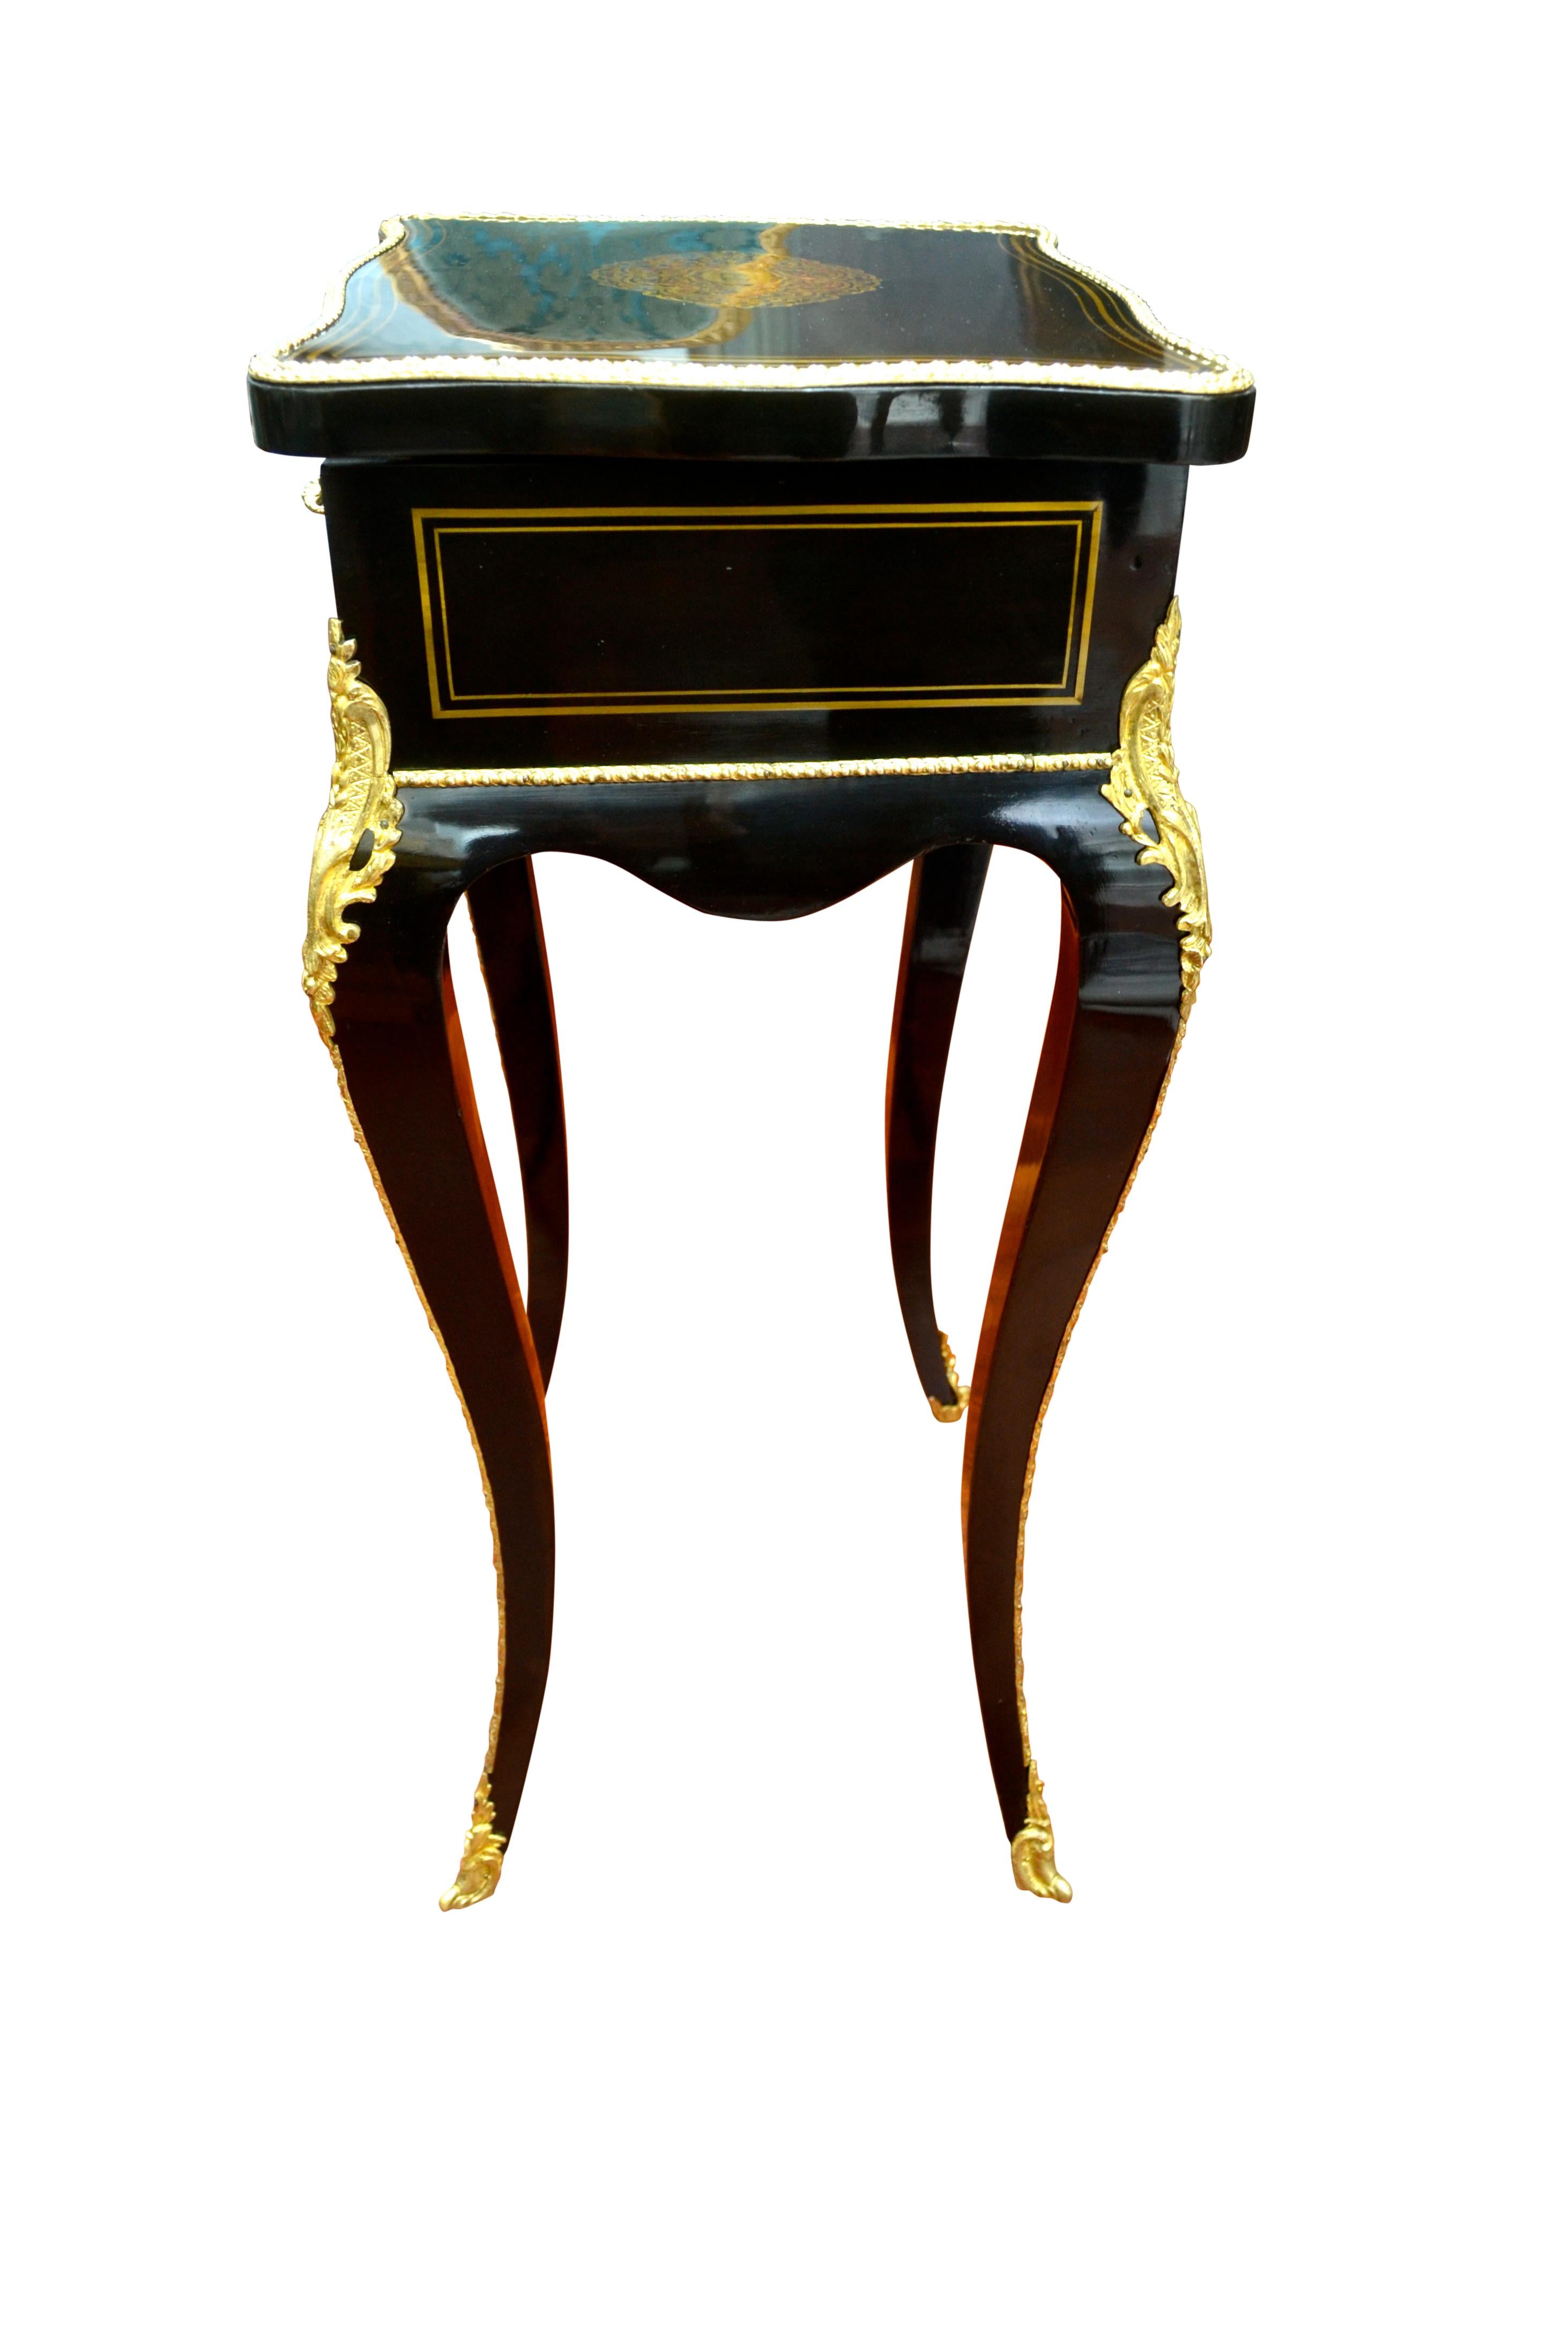 19th Century Napoleon III Ebonized Wood, Brass Inlay and Ormolu Jewelry Table by Tahan